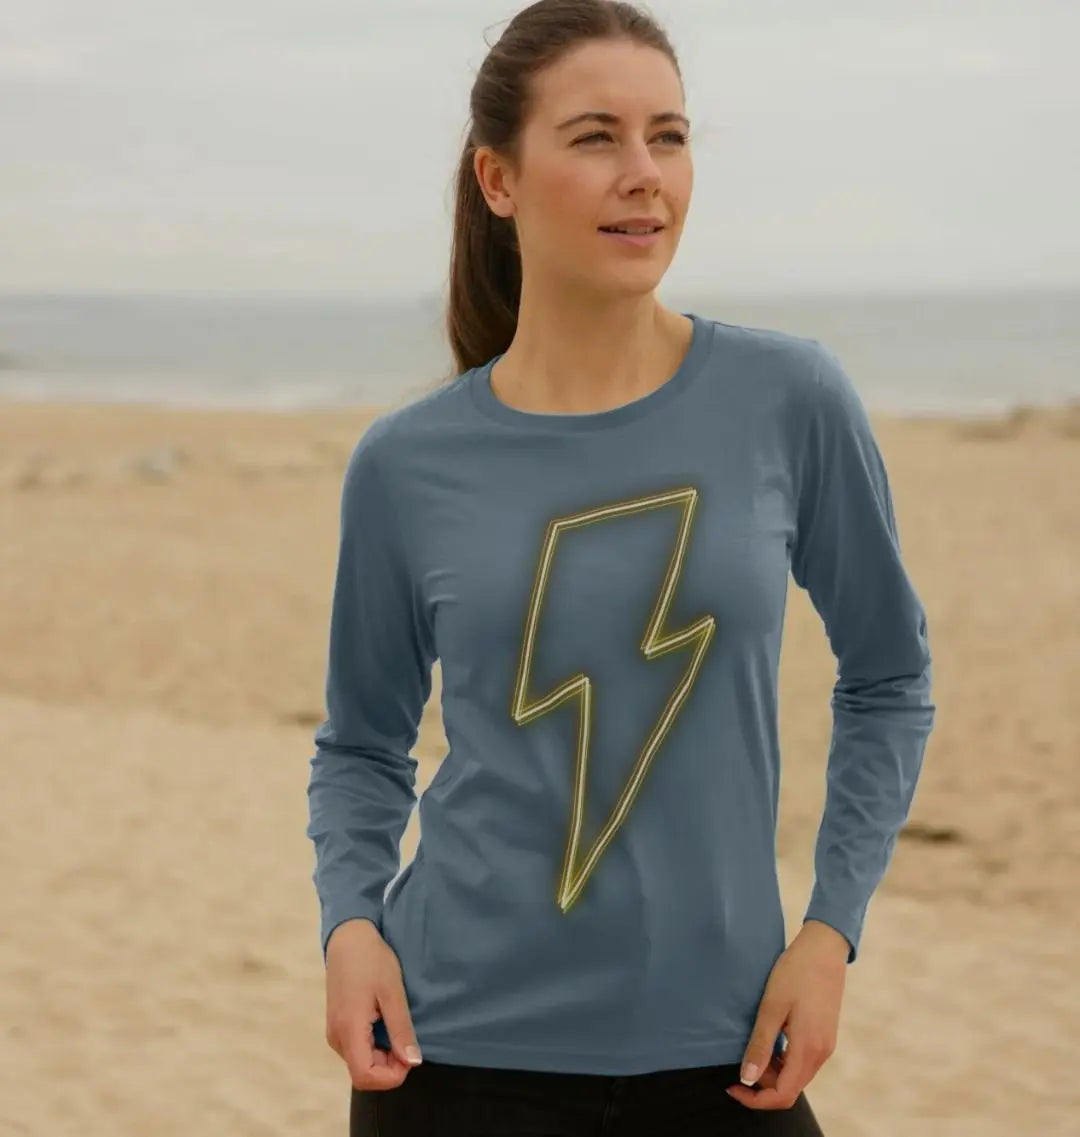 Long sleeve neon lightning bolt t-shirt Trend Tonic